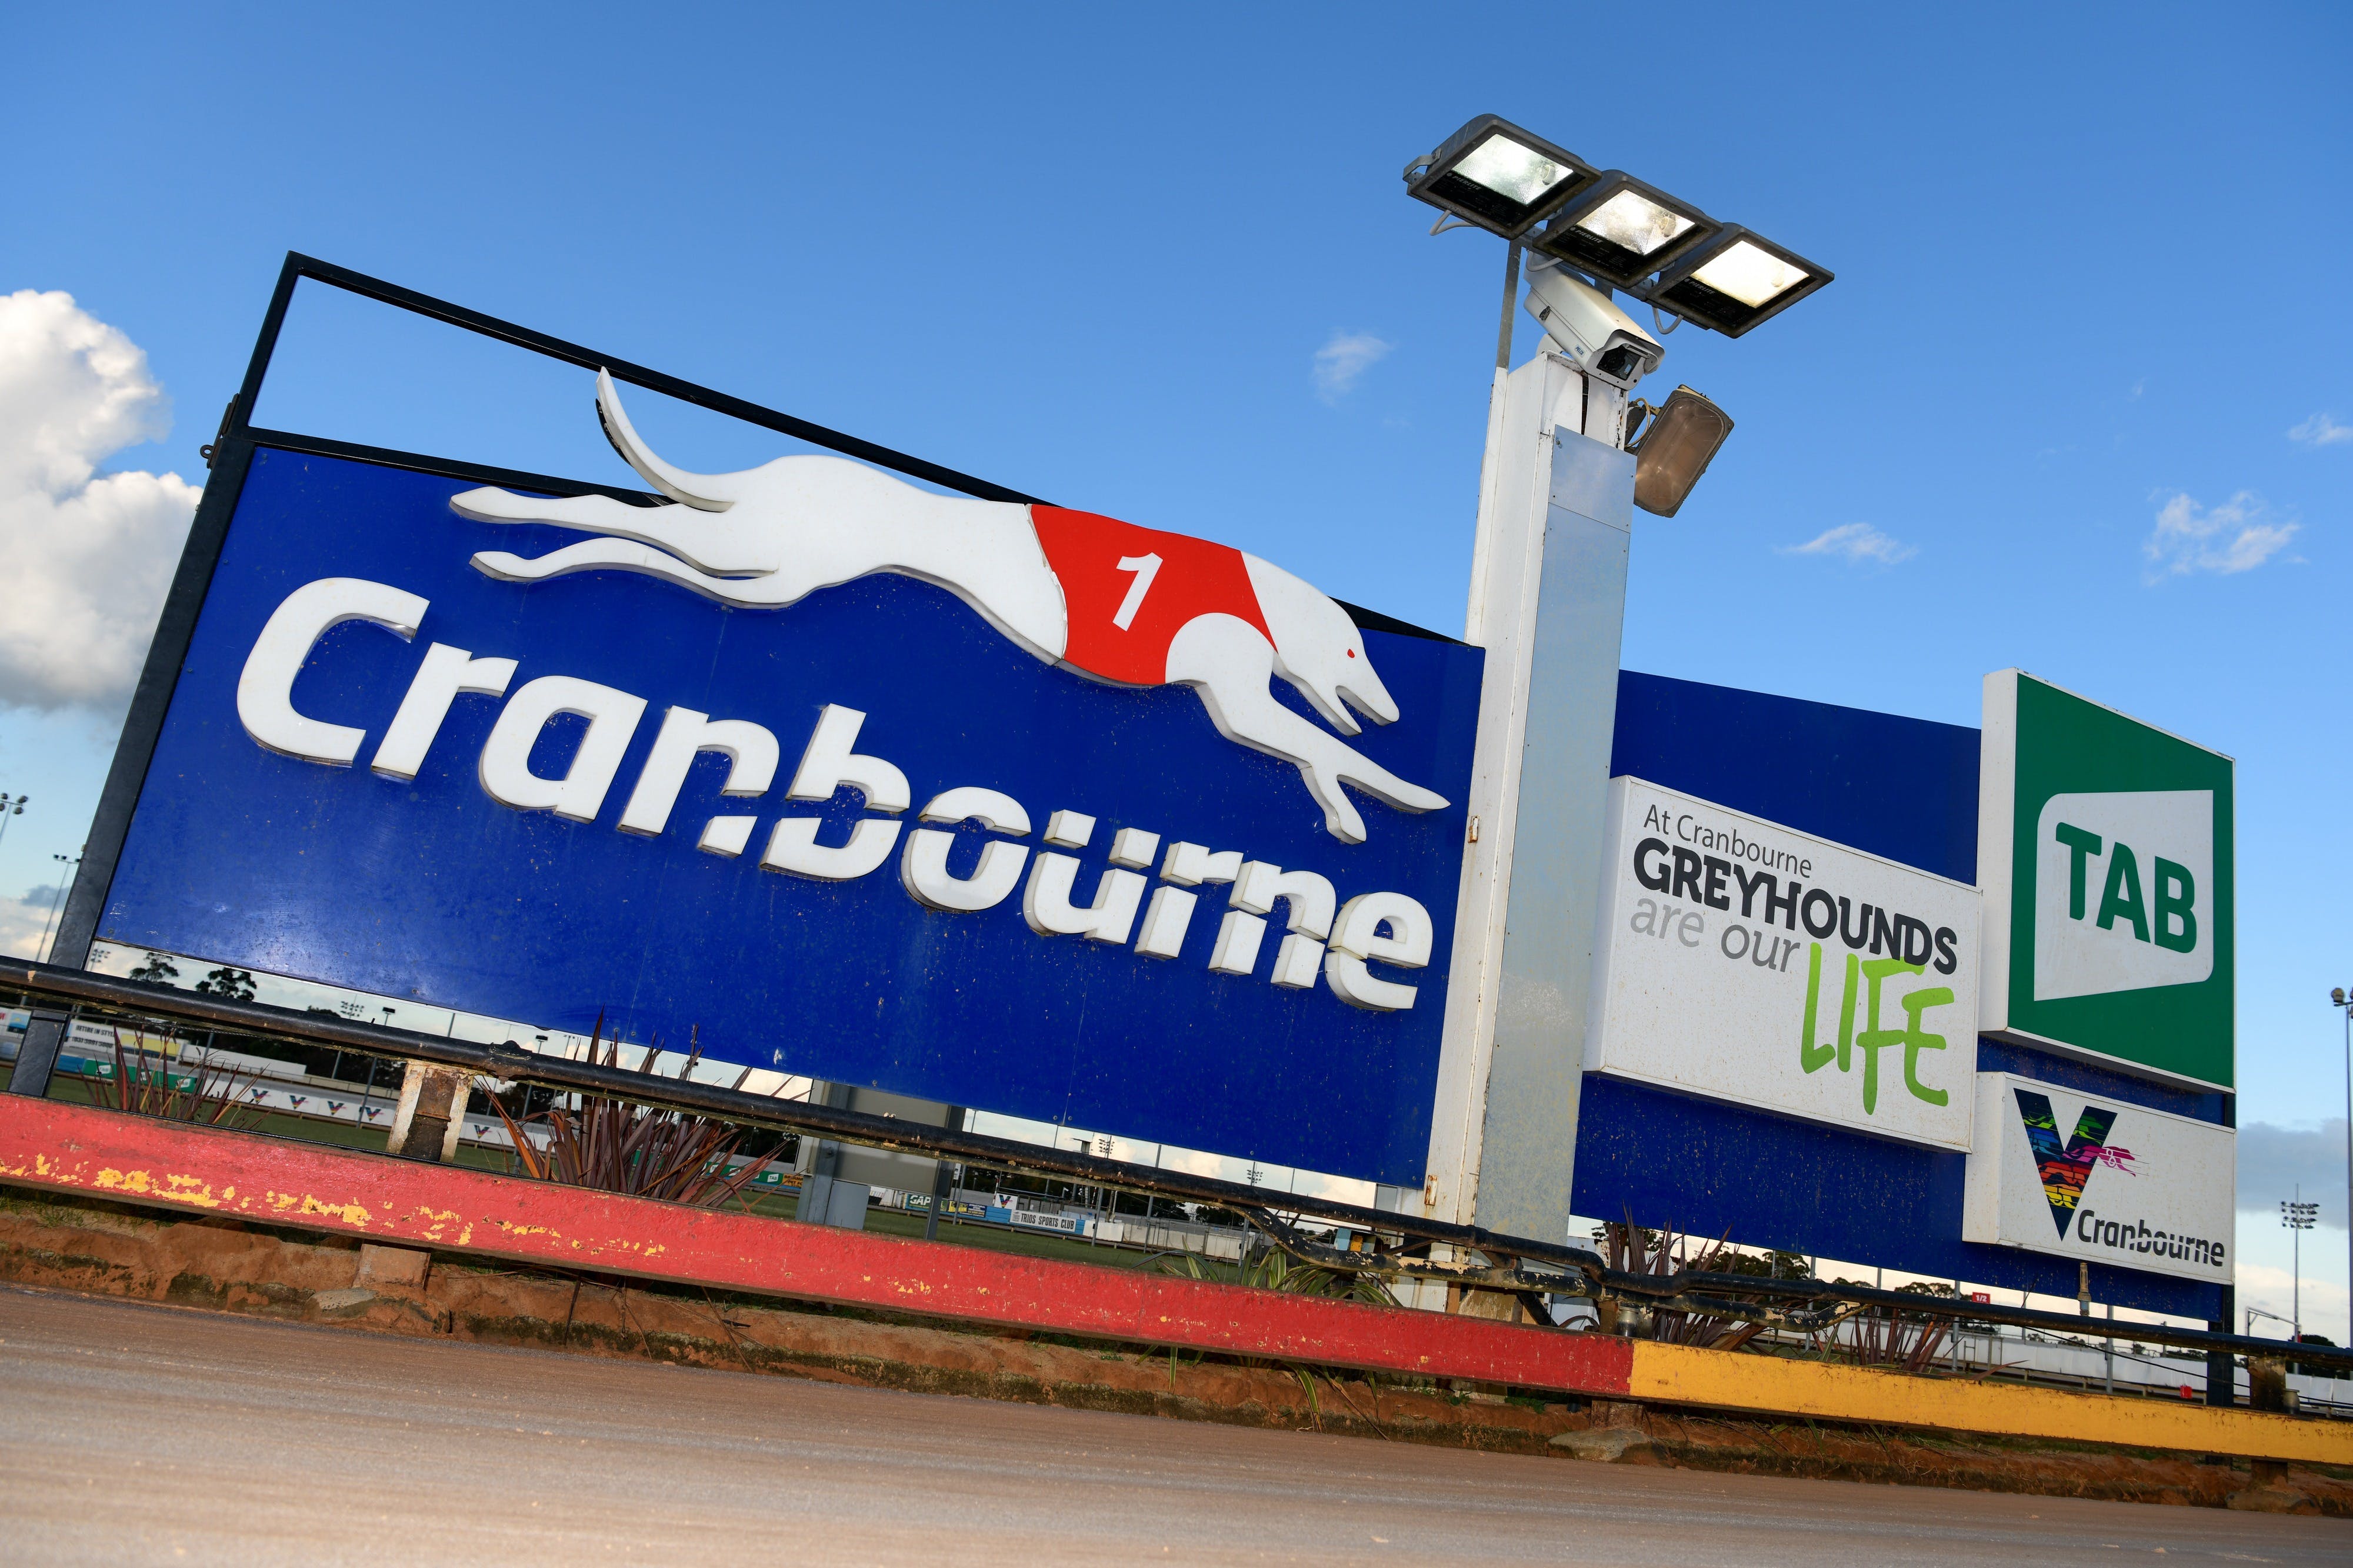 Cranbourne Greyhound Racing Club - Accommodation in Bendigo